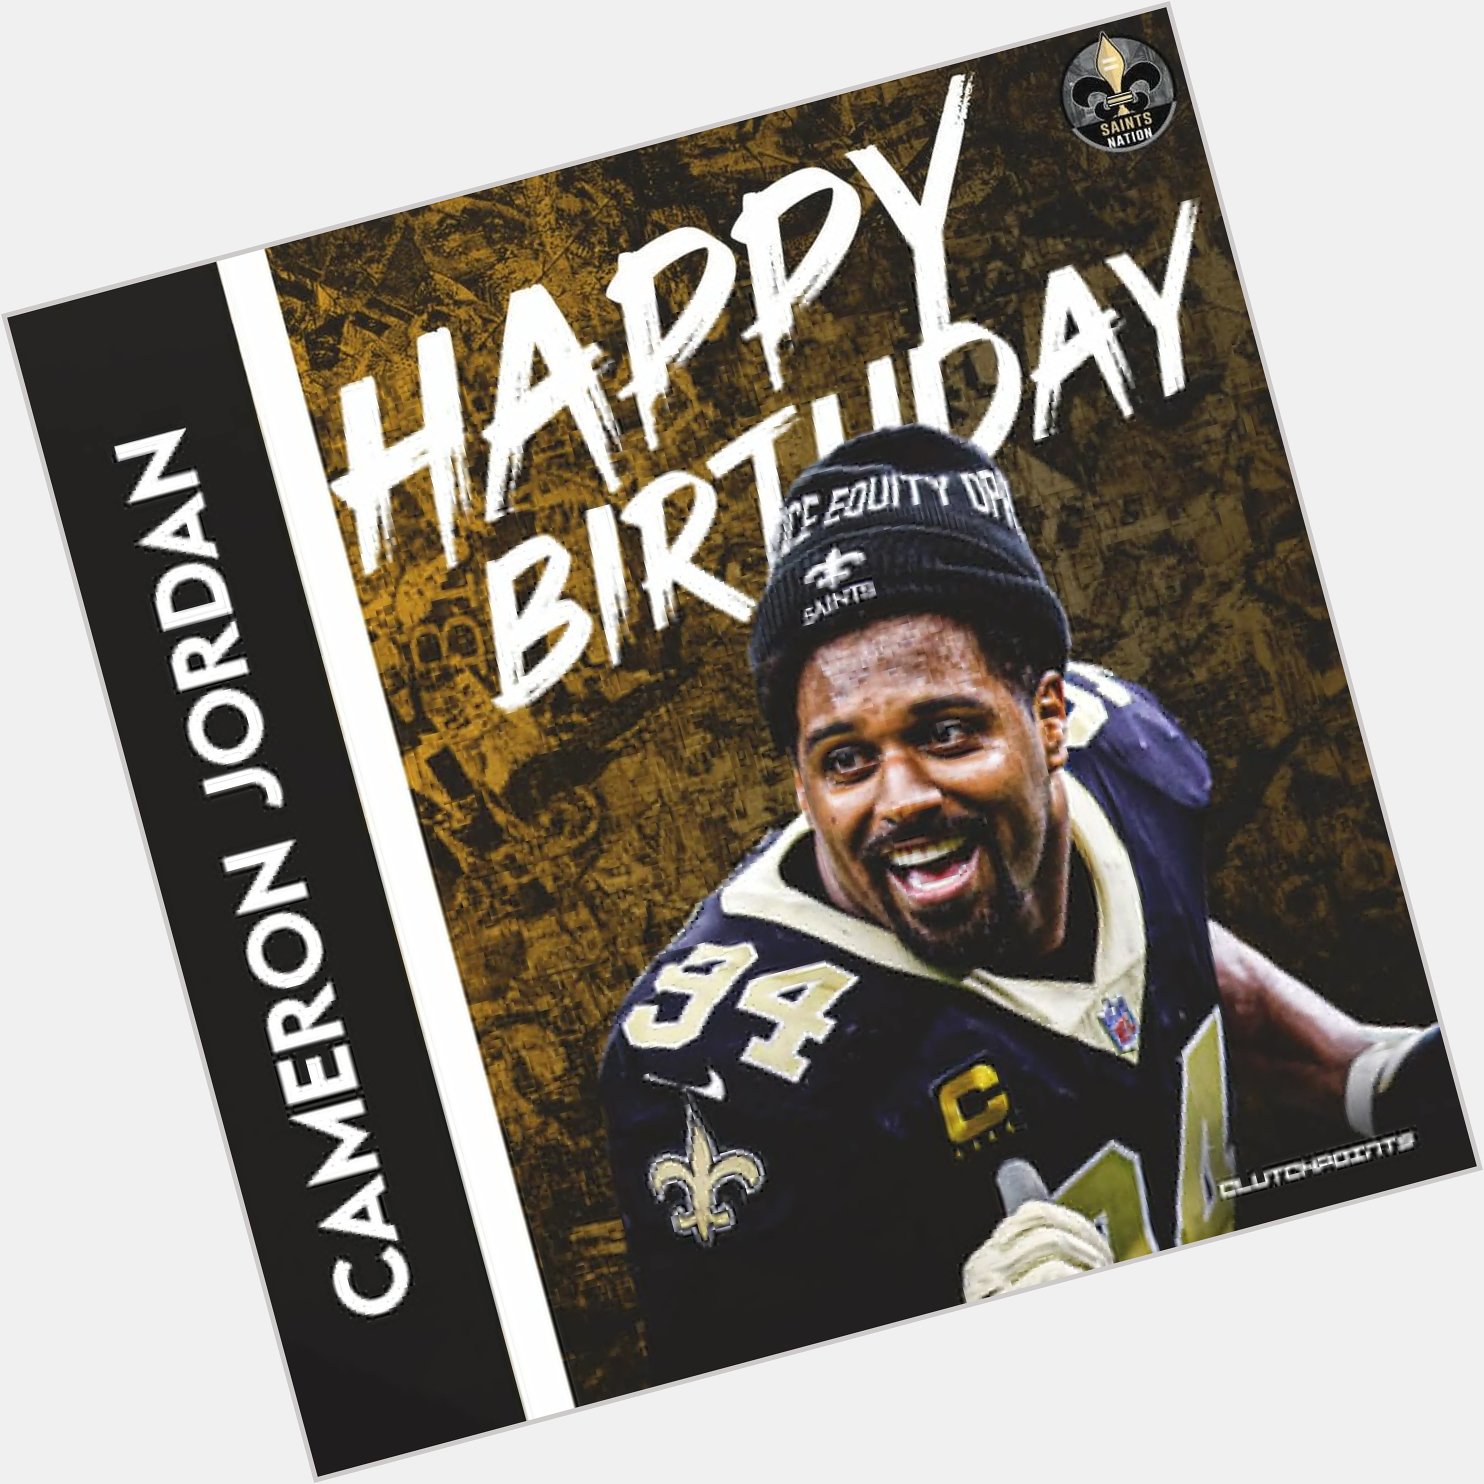 Saints Nation, let wish a very happy 33rd birthday to Cameron Jordan 